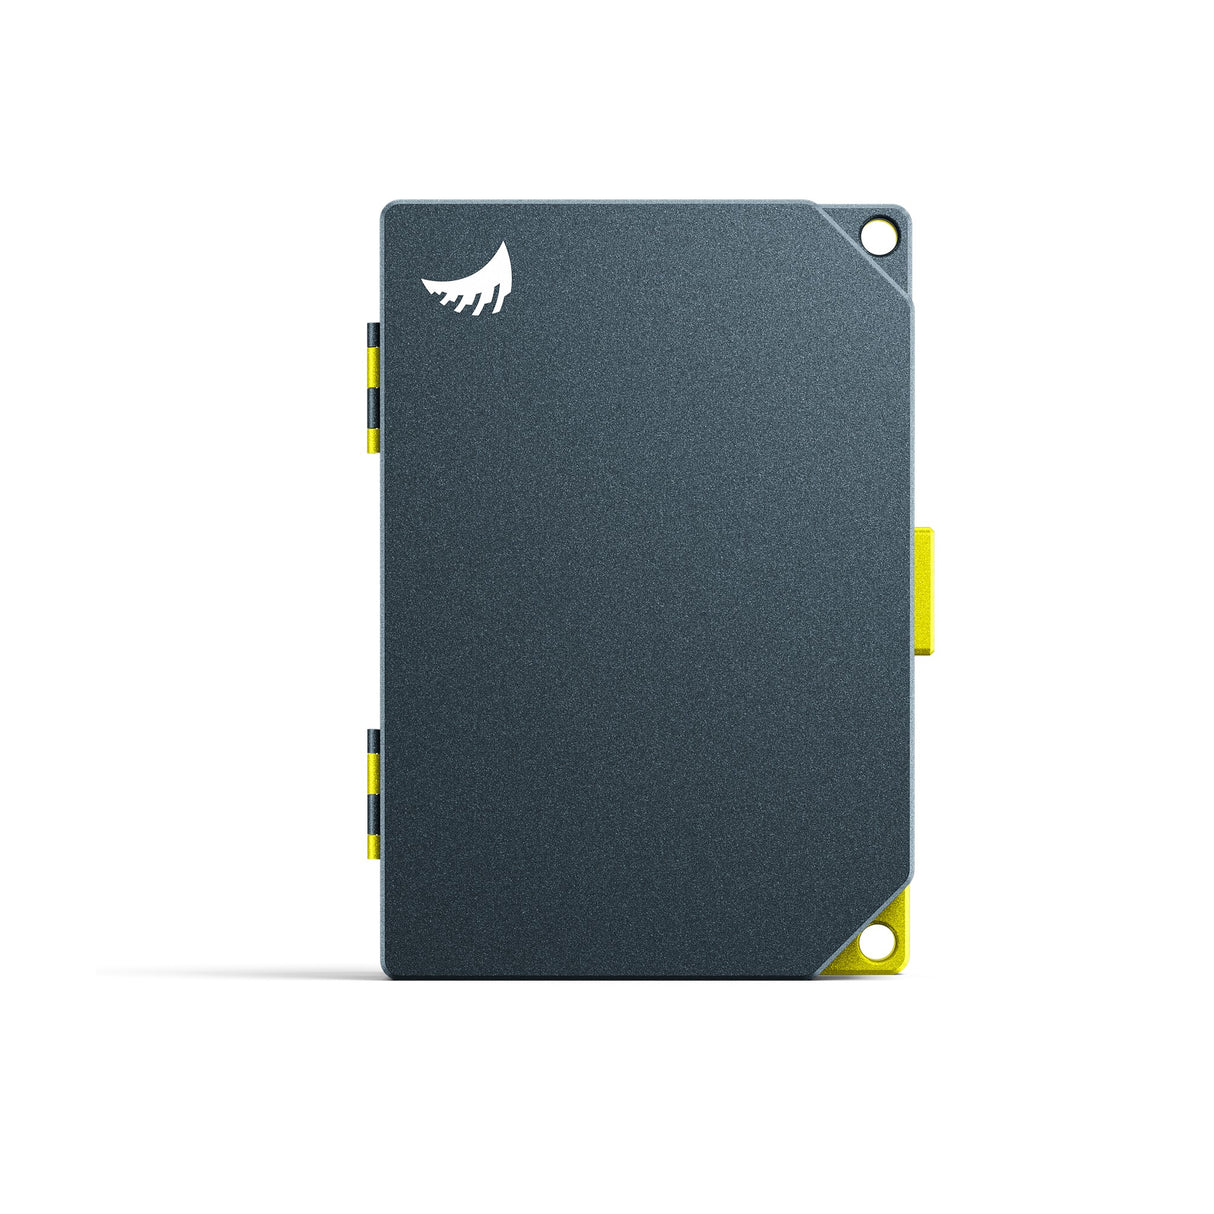 Angelbird Media Tank Hard Storage Case for CFast Memory Cards